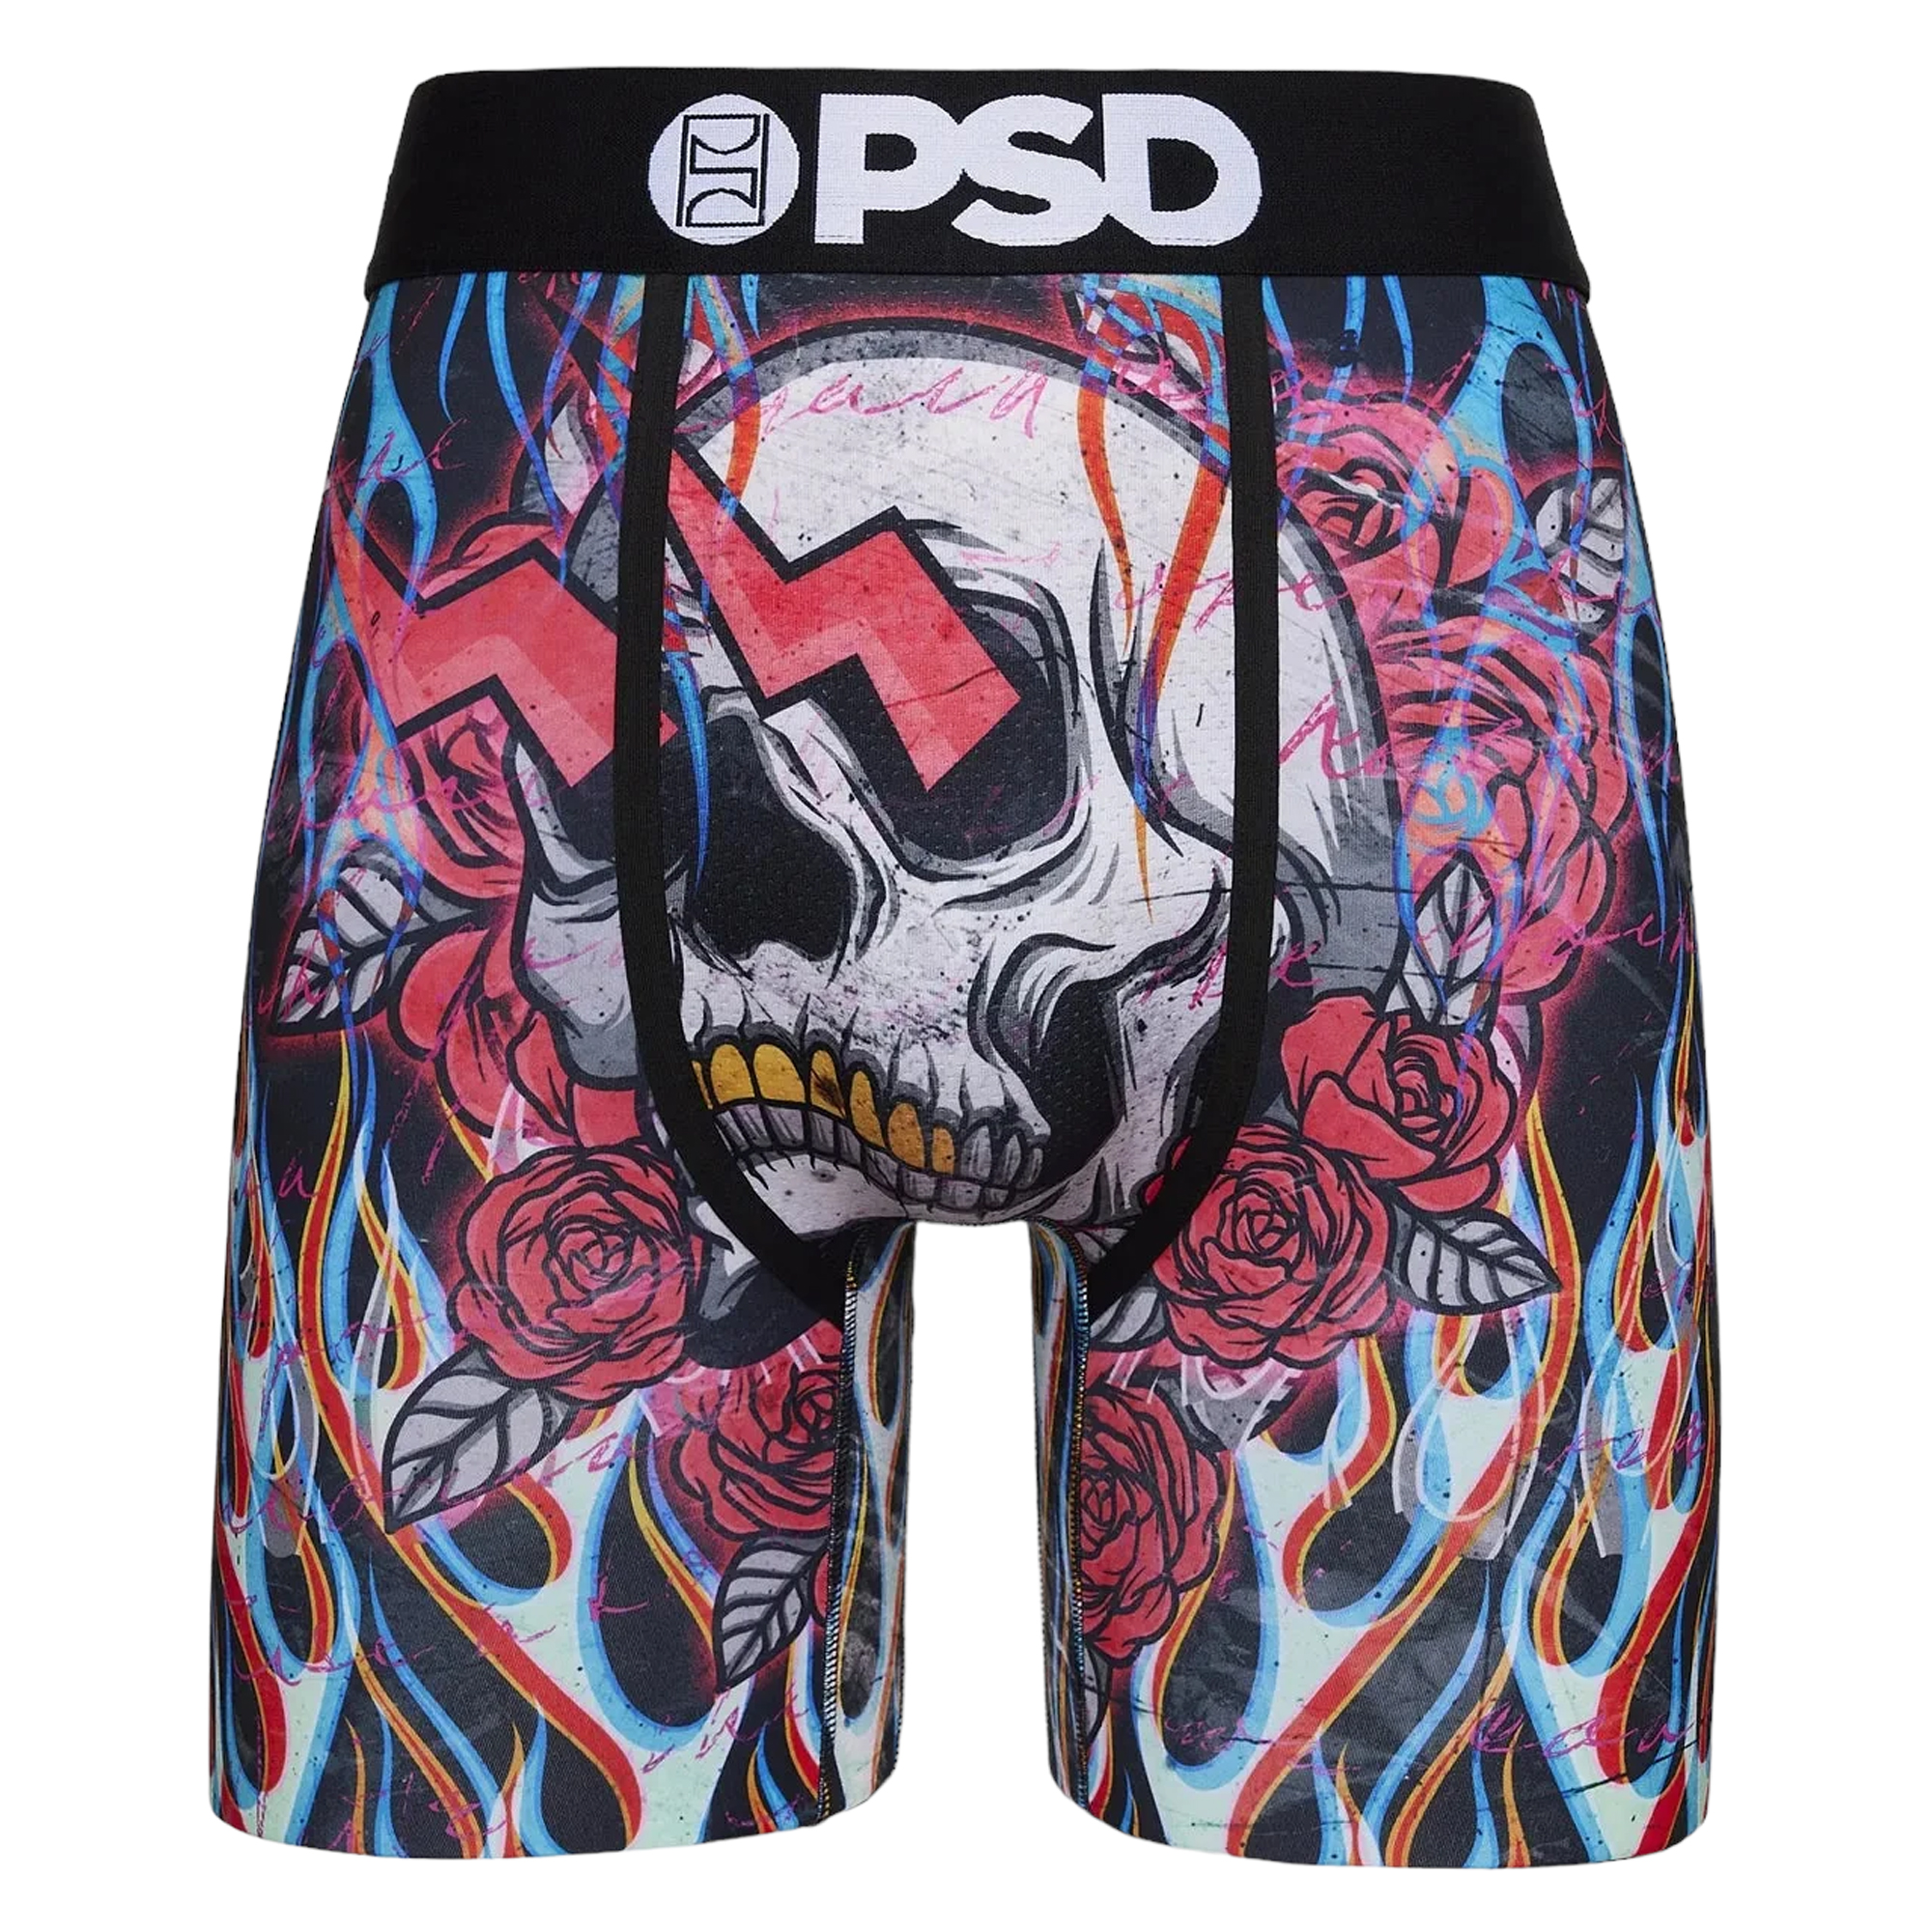 90s Vibes Sports Bra - PSD Underwear